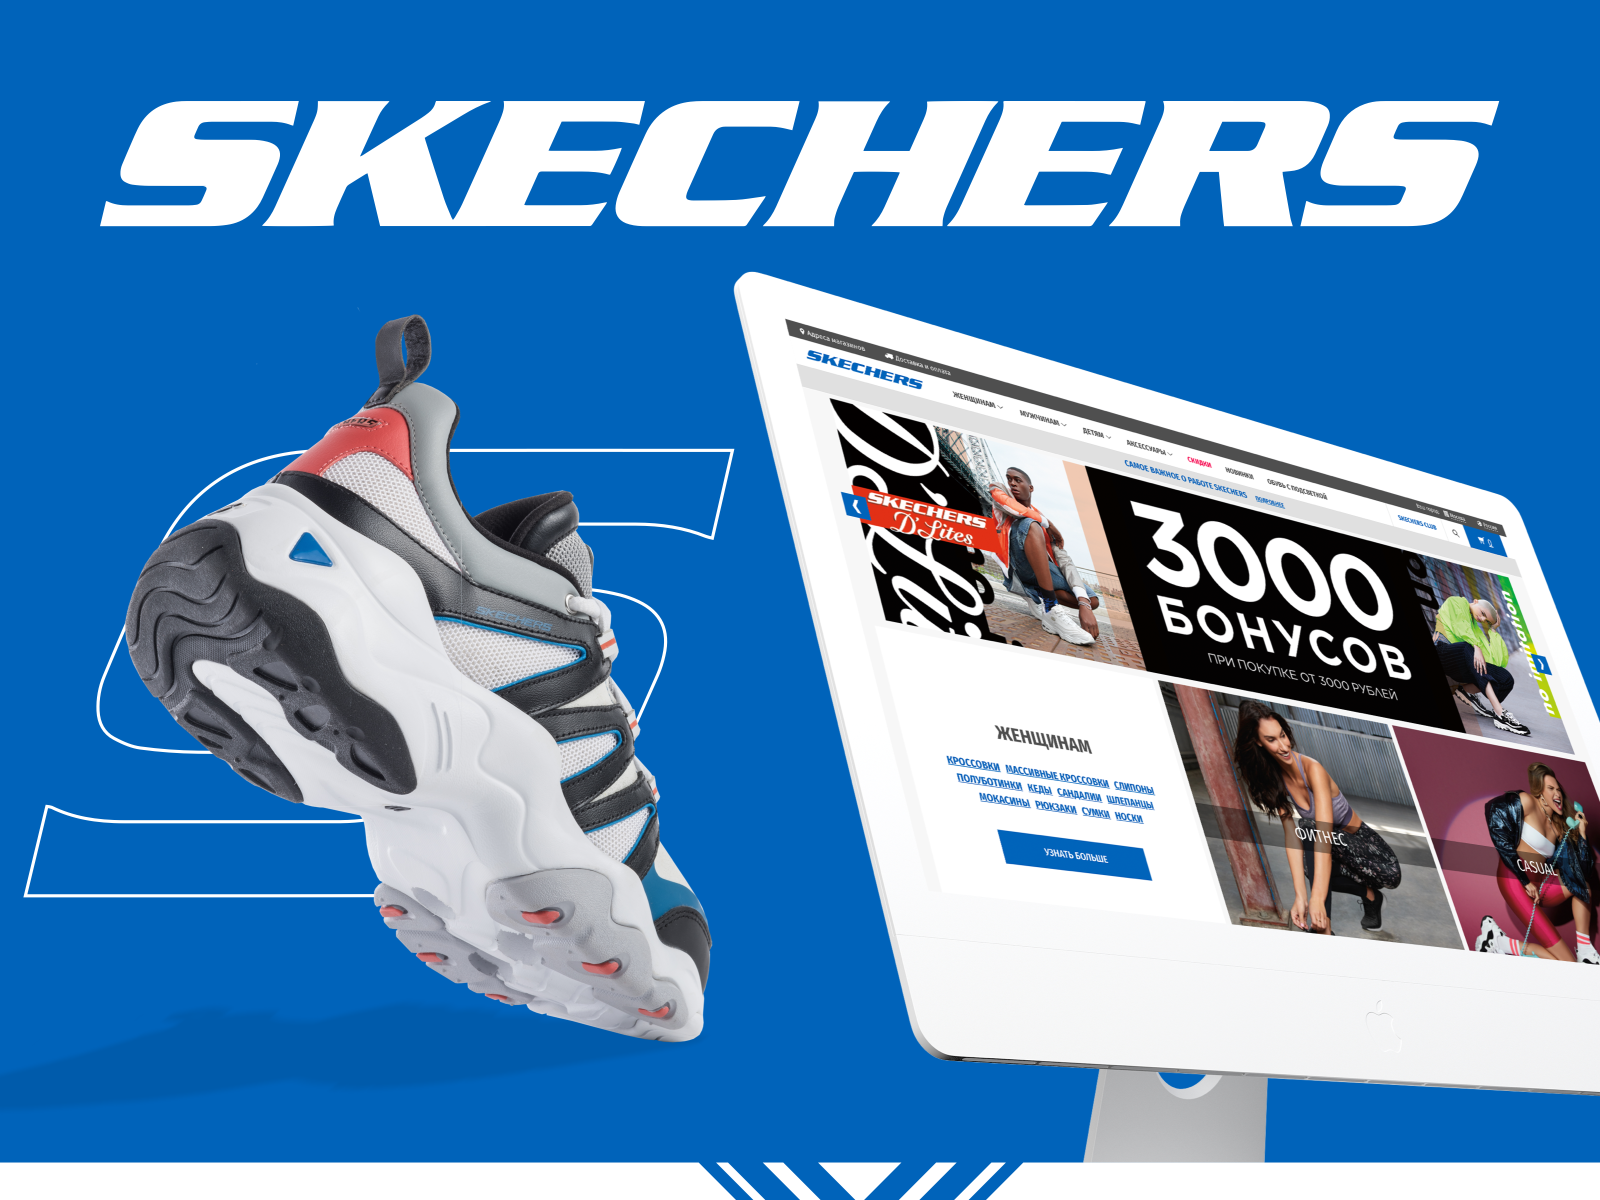 skechers shoes design